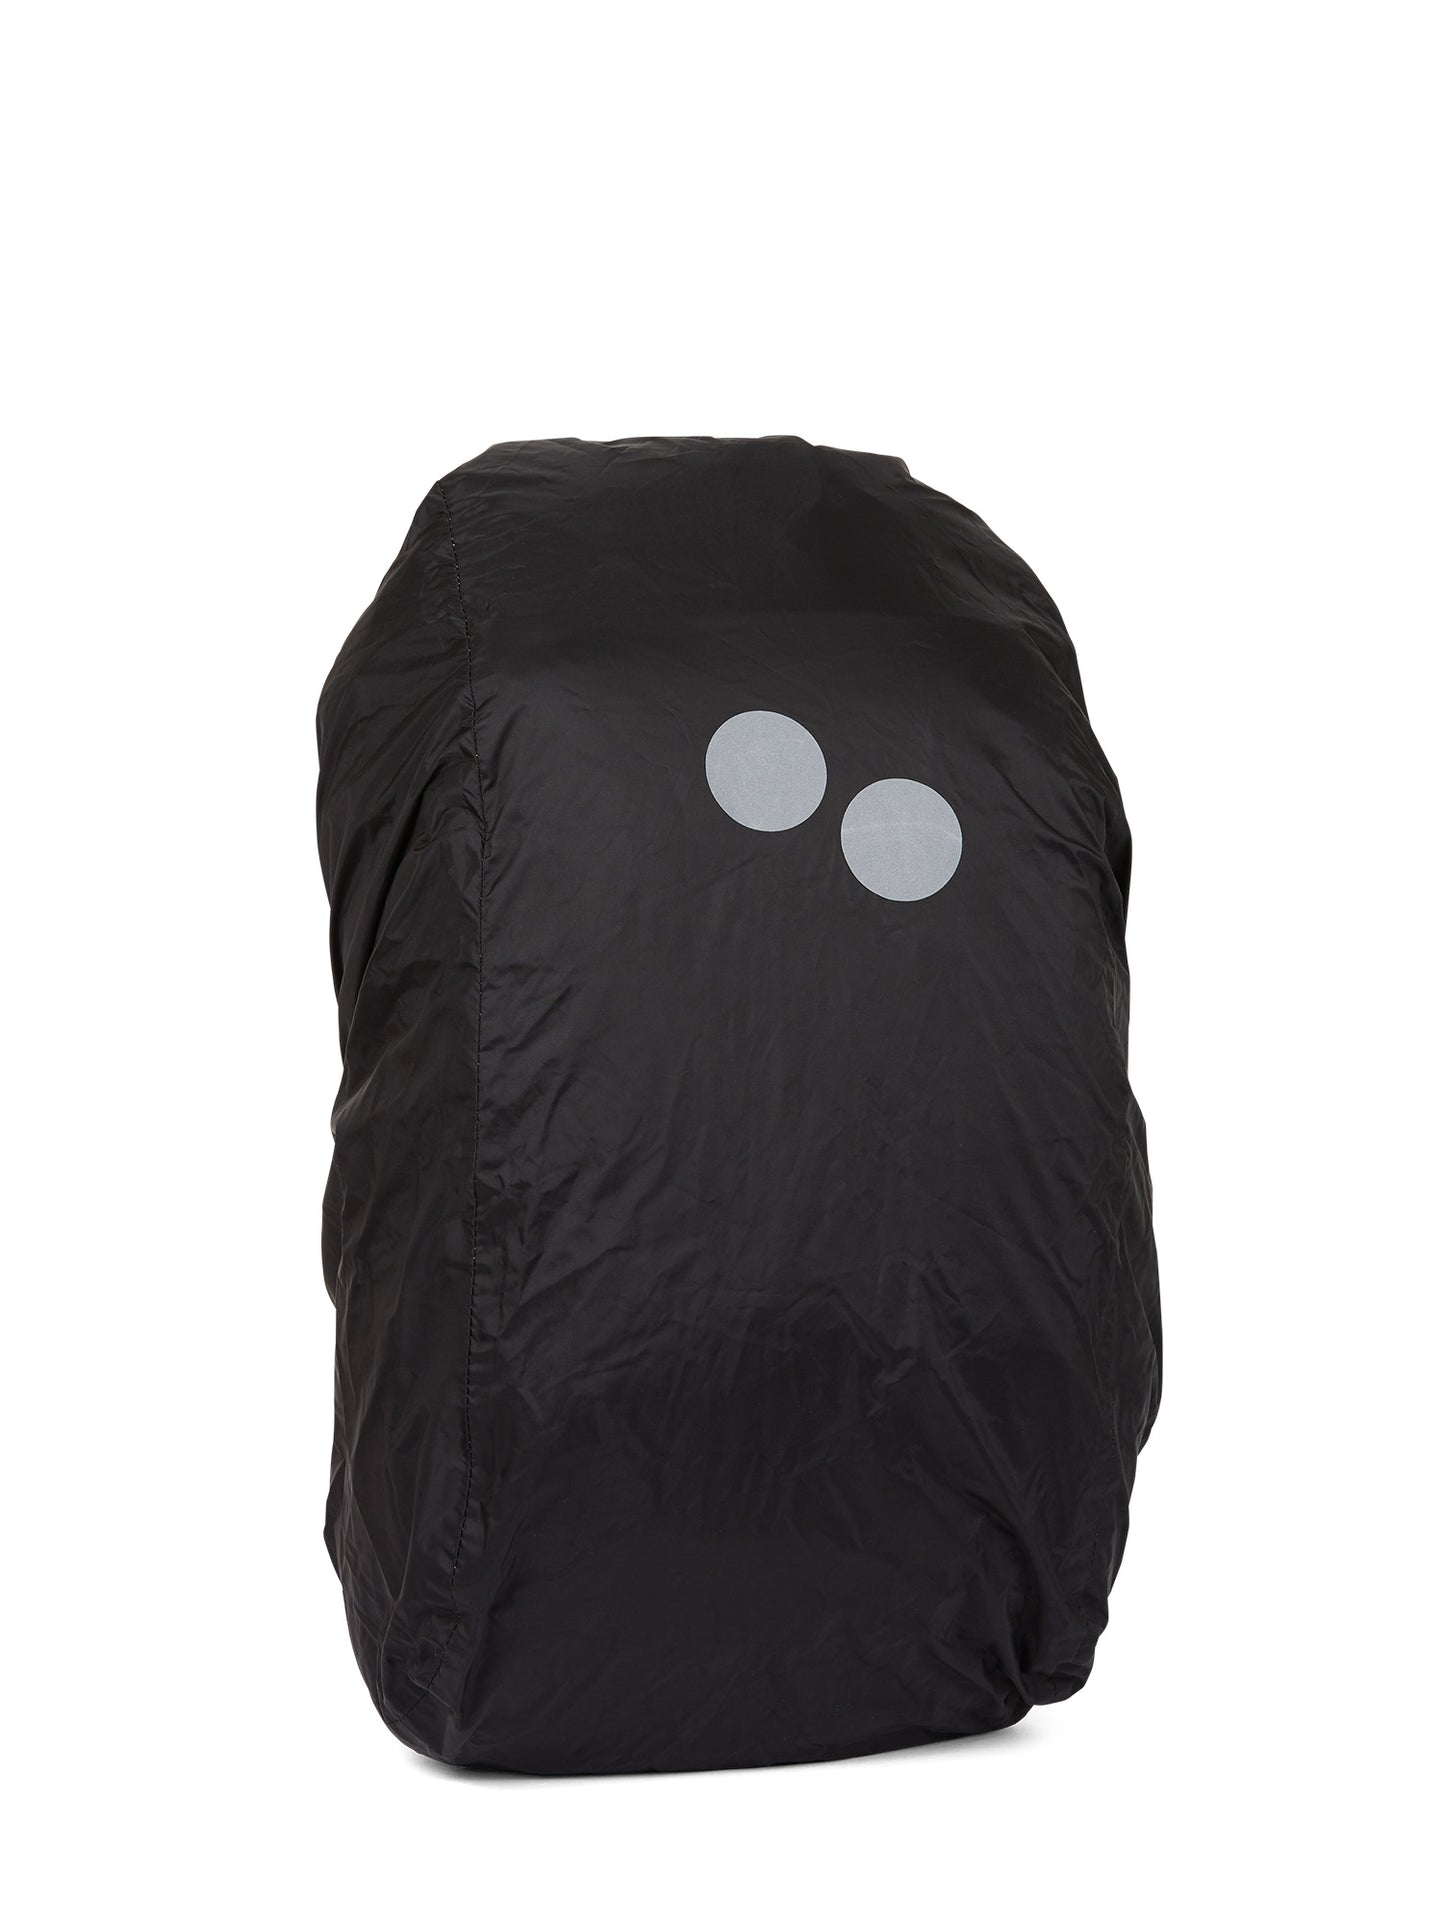 pinqponq-backpack-Komut-Medium-Pure-Khaki-rain-cover